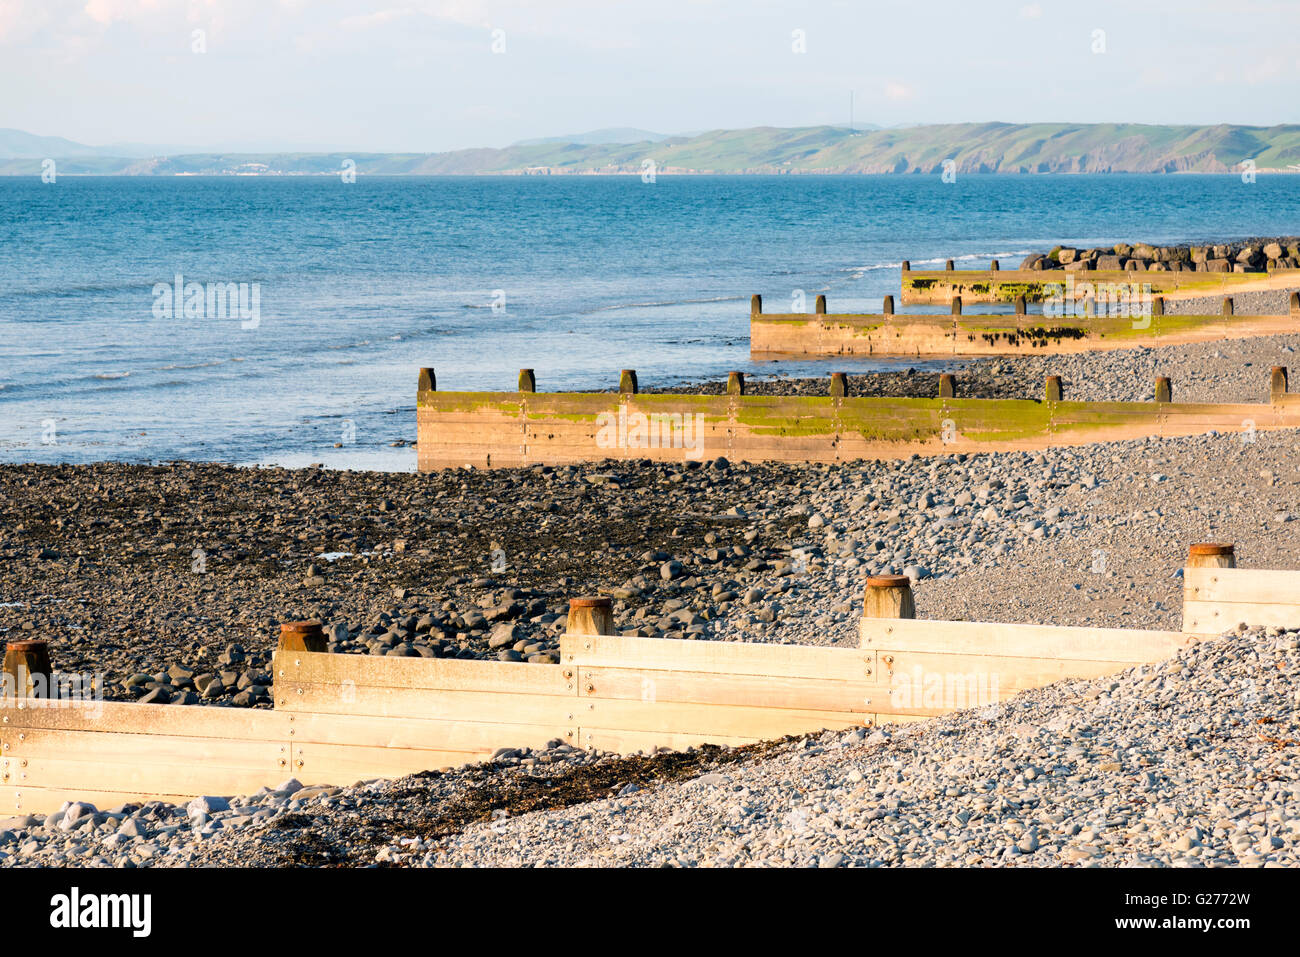 Sea defenses at Aberaeron, Wales, UK. Groynes protecting the shoreline. Stock Photo